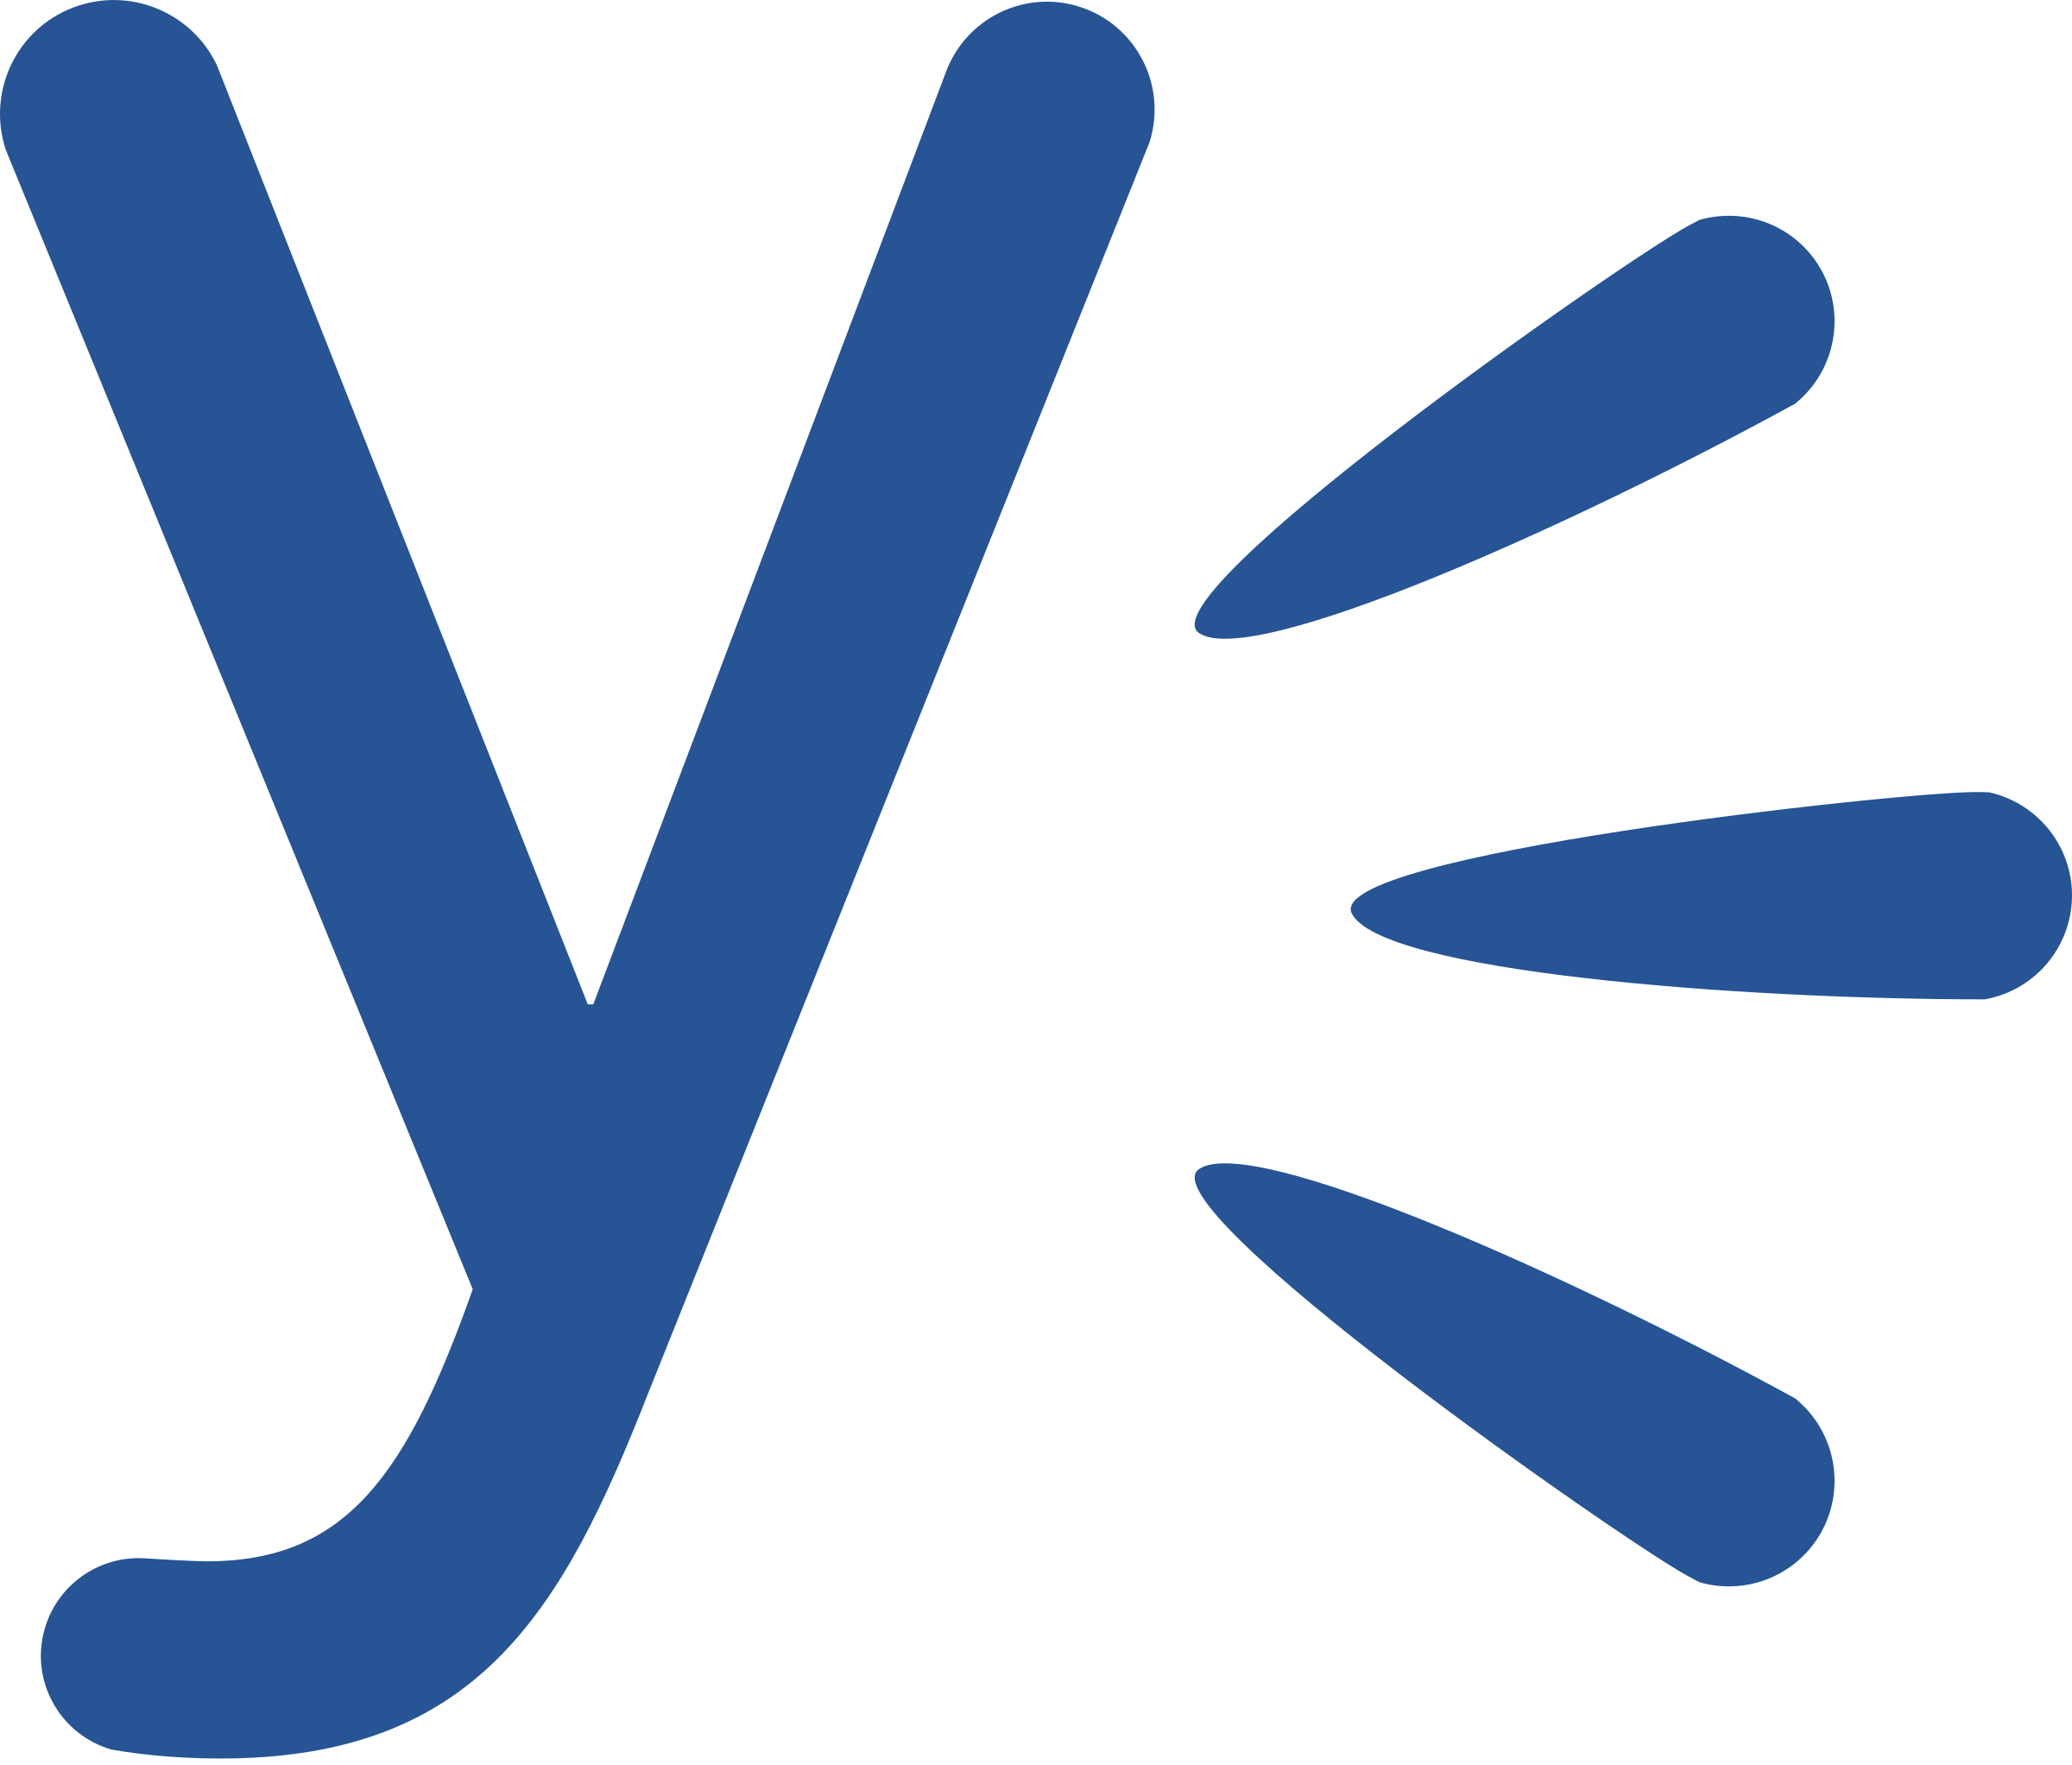 Yammer Logo Png Transparent & Svg Vector - Pluspng Pluspng, Yammer Logo PNG - Free PNG